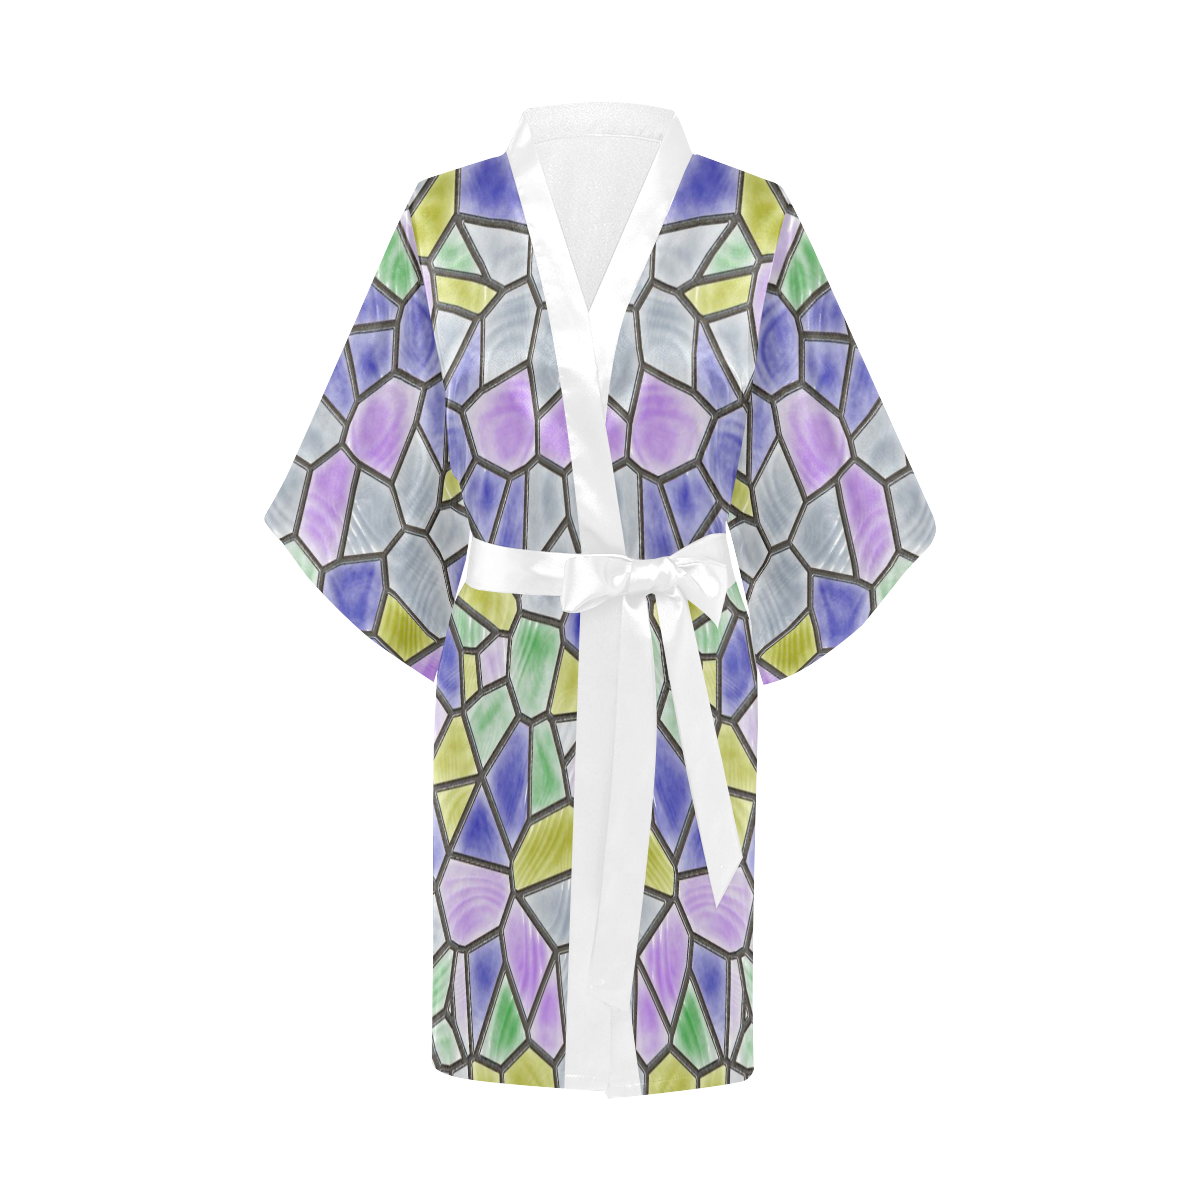 Mosaic Linda 5 by JamColors Kimono Robe